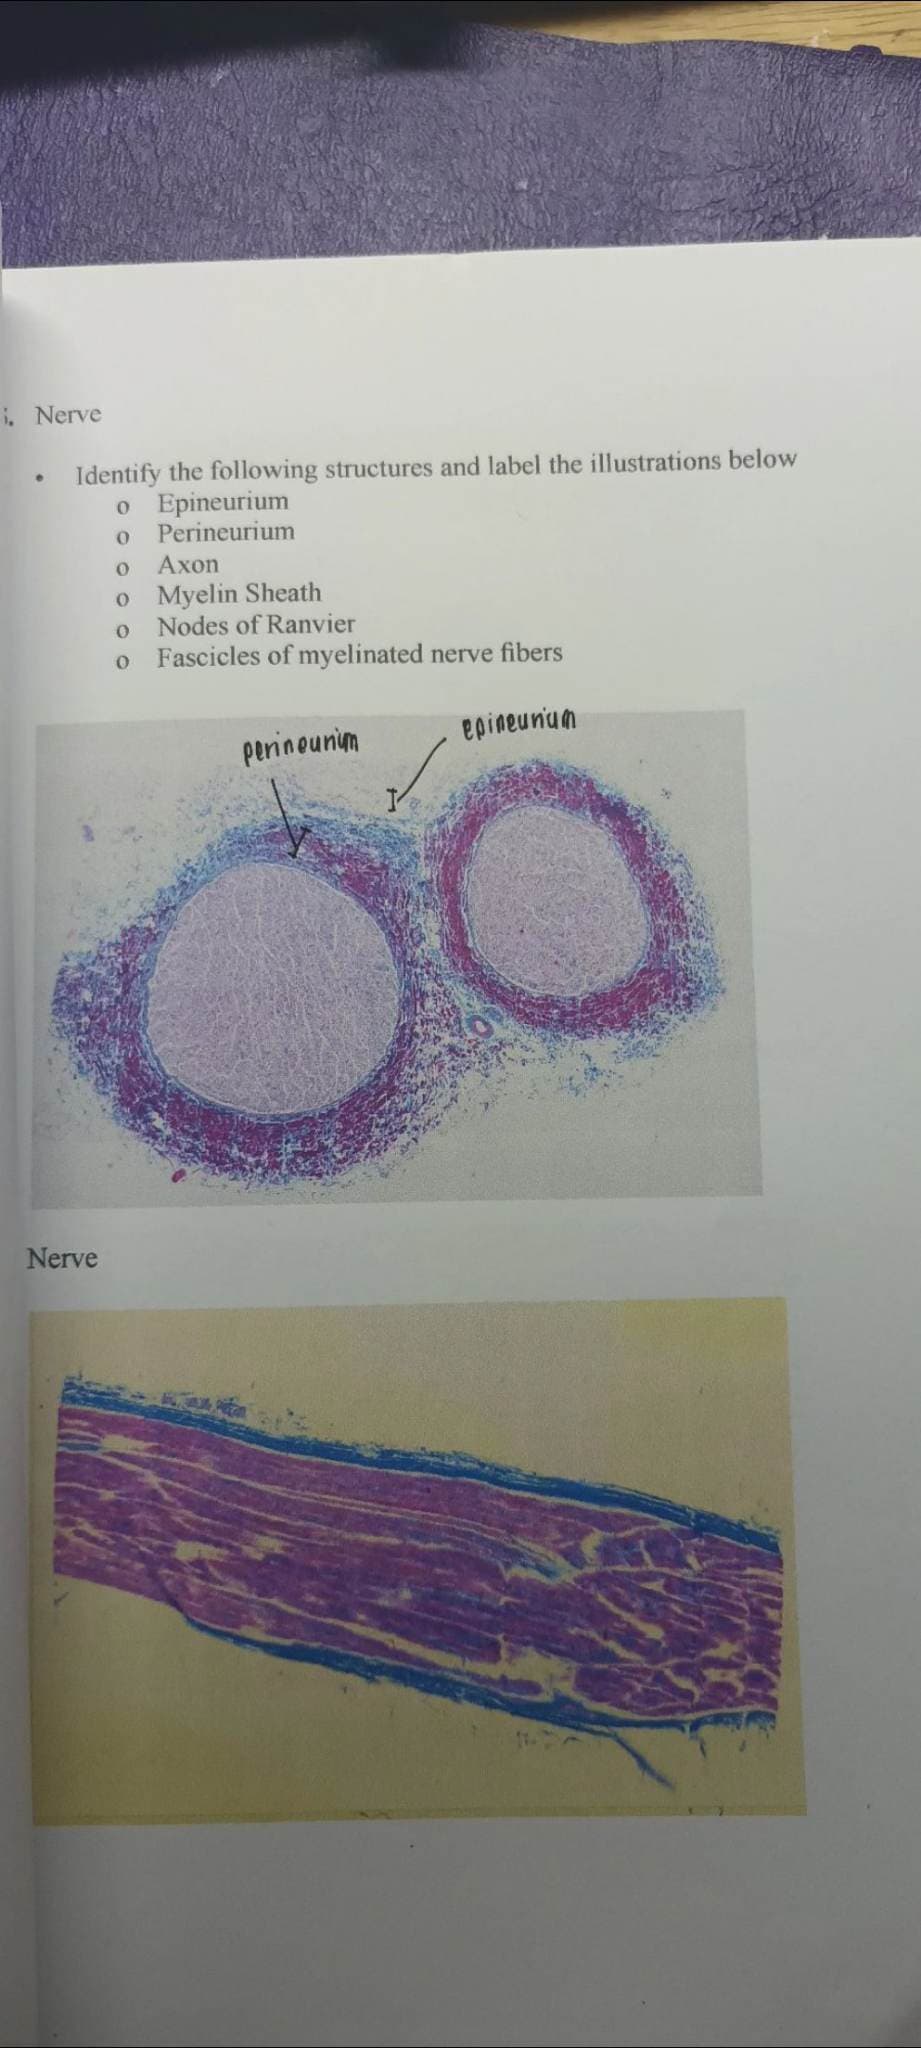 i. Nerve
Identify the following structures and label the illustrations below
o Epineurium
0
Perineurium
Nerve
0
Axon
o Myelin Sheath
0
0
Nodes of Ranvier
Fascicles of myelinated nerve fibers
epineunium
perineunum
00